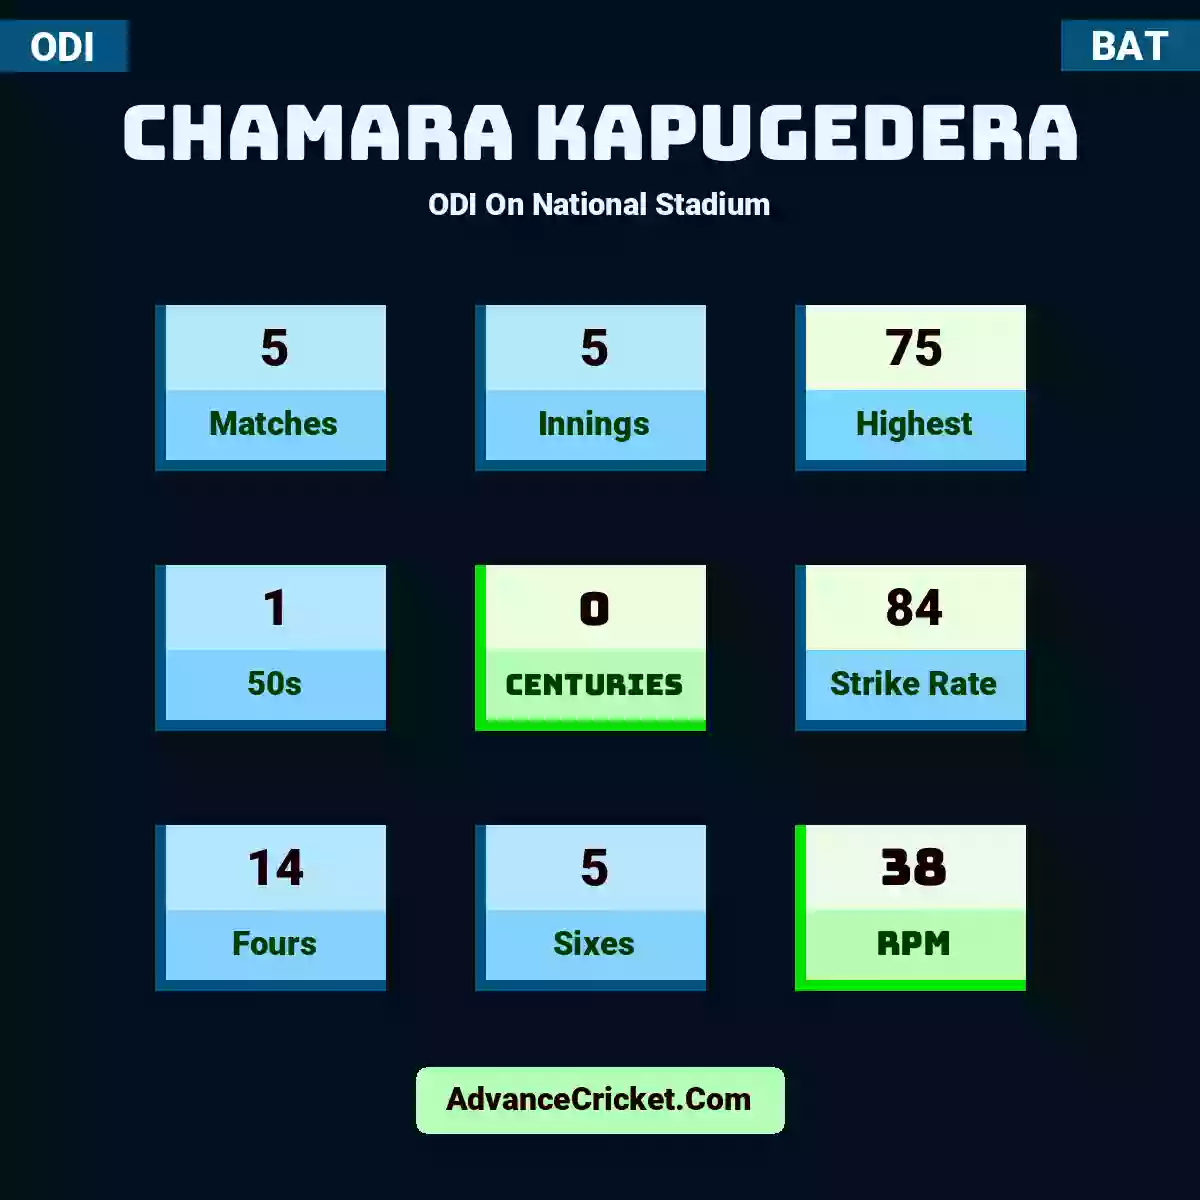 Chamara Kapugedera ODI  On National Stadium, Chamara Kapugedera played 5 matches, scored 75 runs as highest, 1 half-centuries, and 0 centuries, with a strike rate of 84. C.Kapugedera hit 14 fours and 5 sixes, with an RPM of 38.